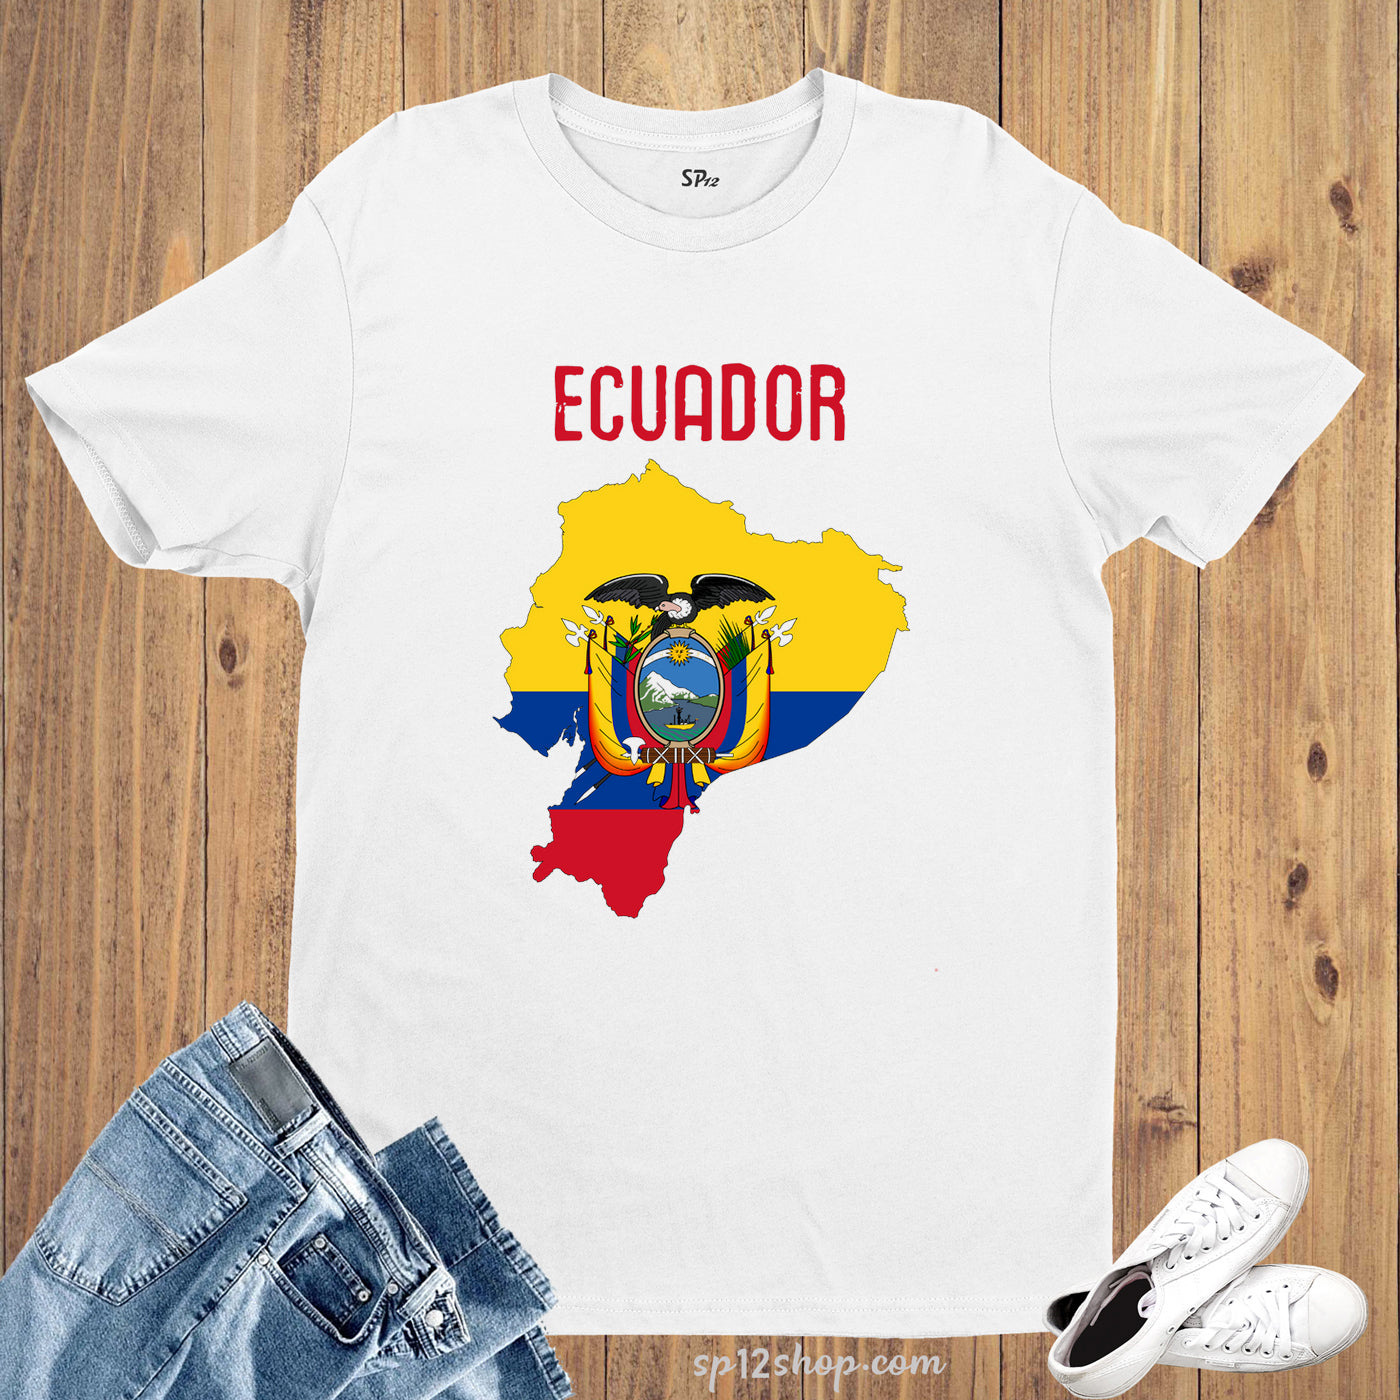 Ecuador Flag T Shirt Olympics FIFA World Cup Country Flag Tee Shirt